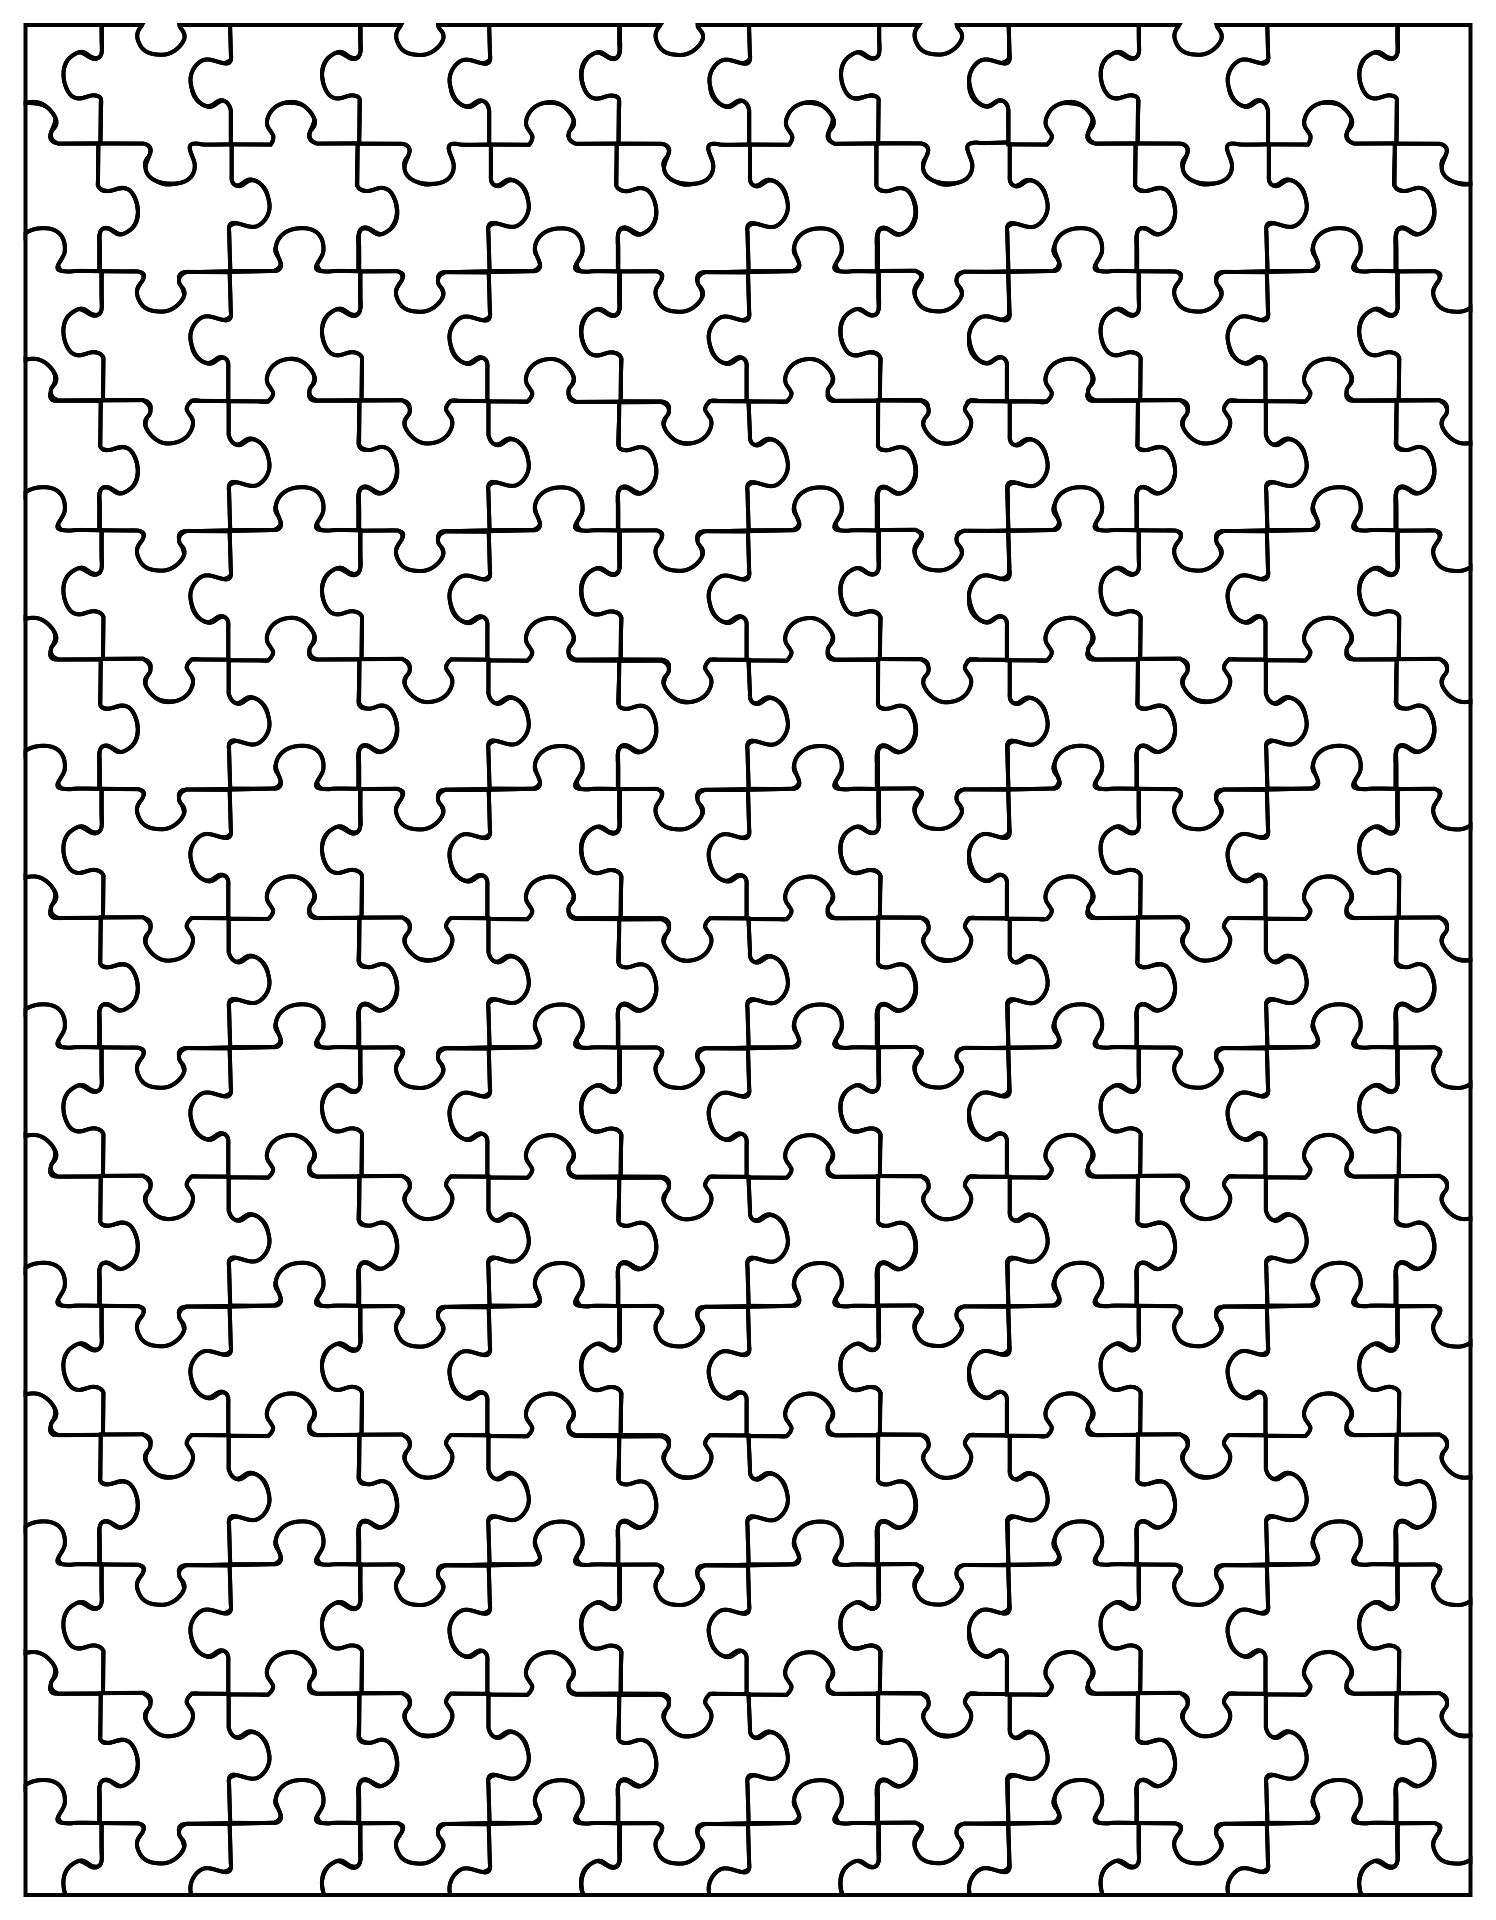 printable-jigsaw-puzzles